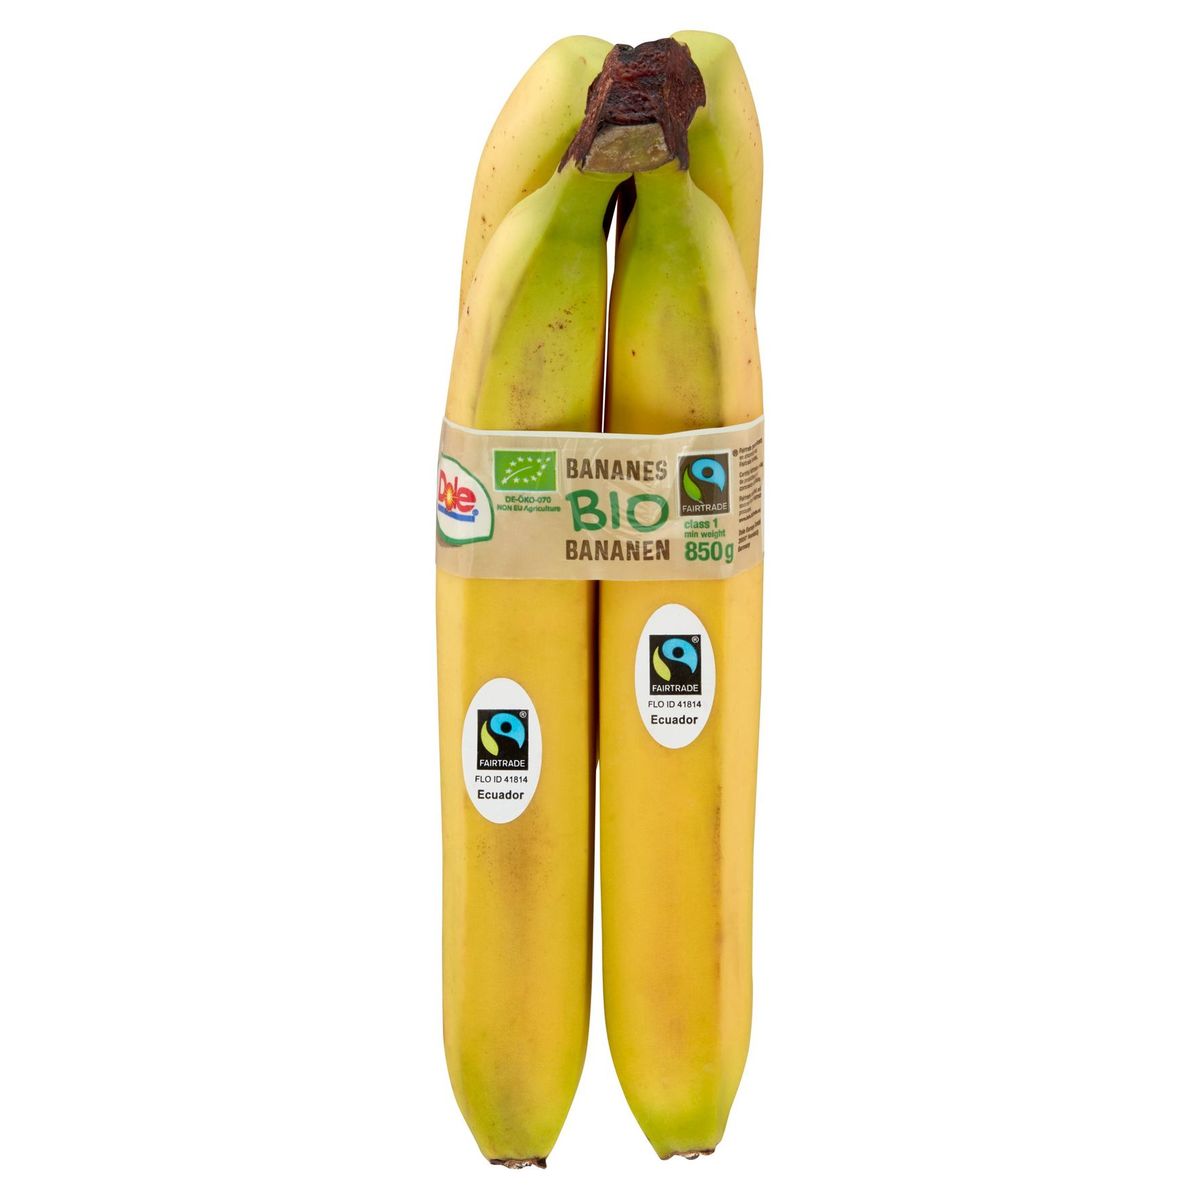 Dole Bananes Bio 850 g